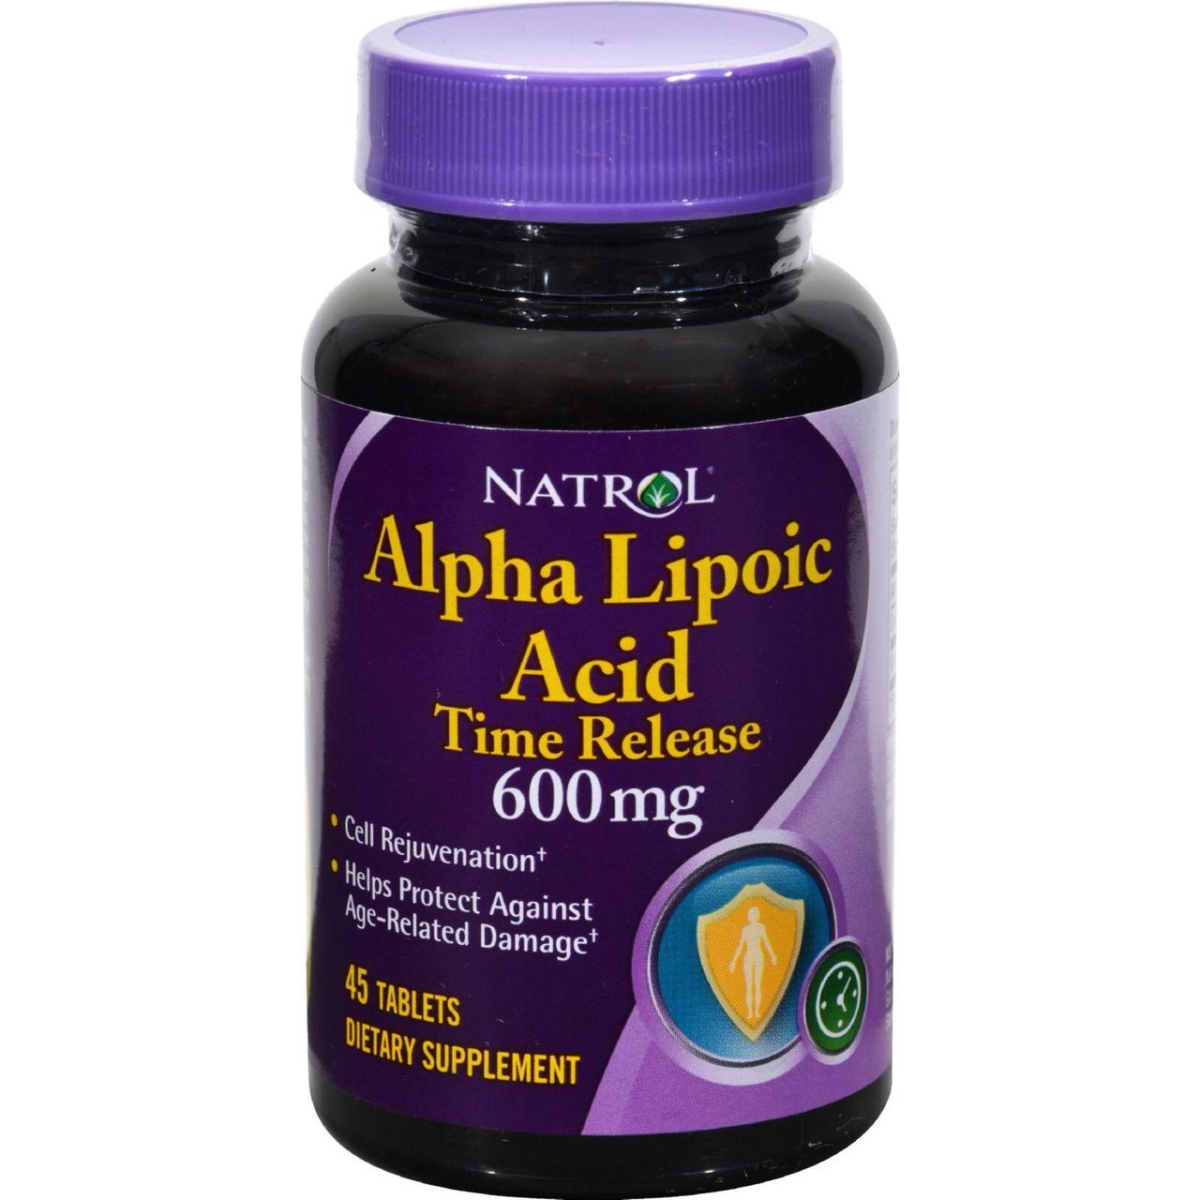 Hg0592899 600 Mg Alpha Lipoic Acid Time Release - 45 Tablets